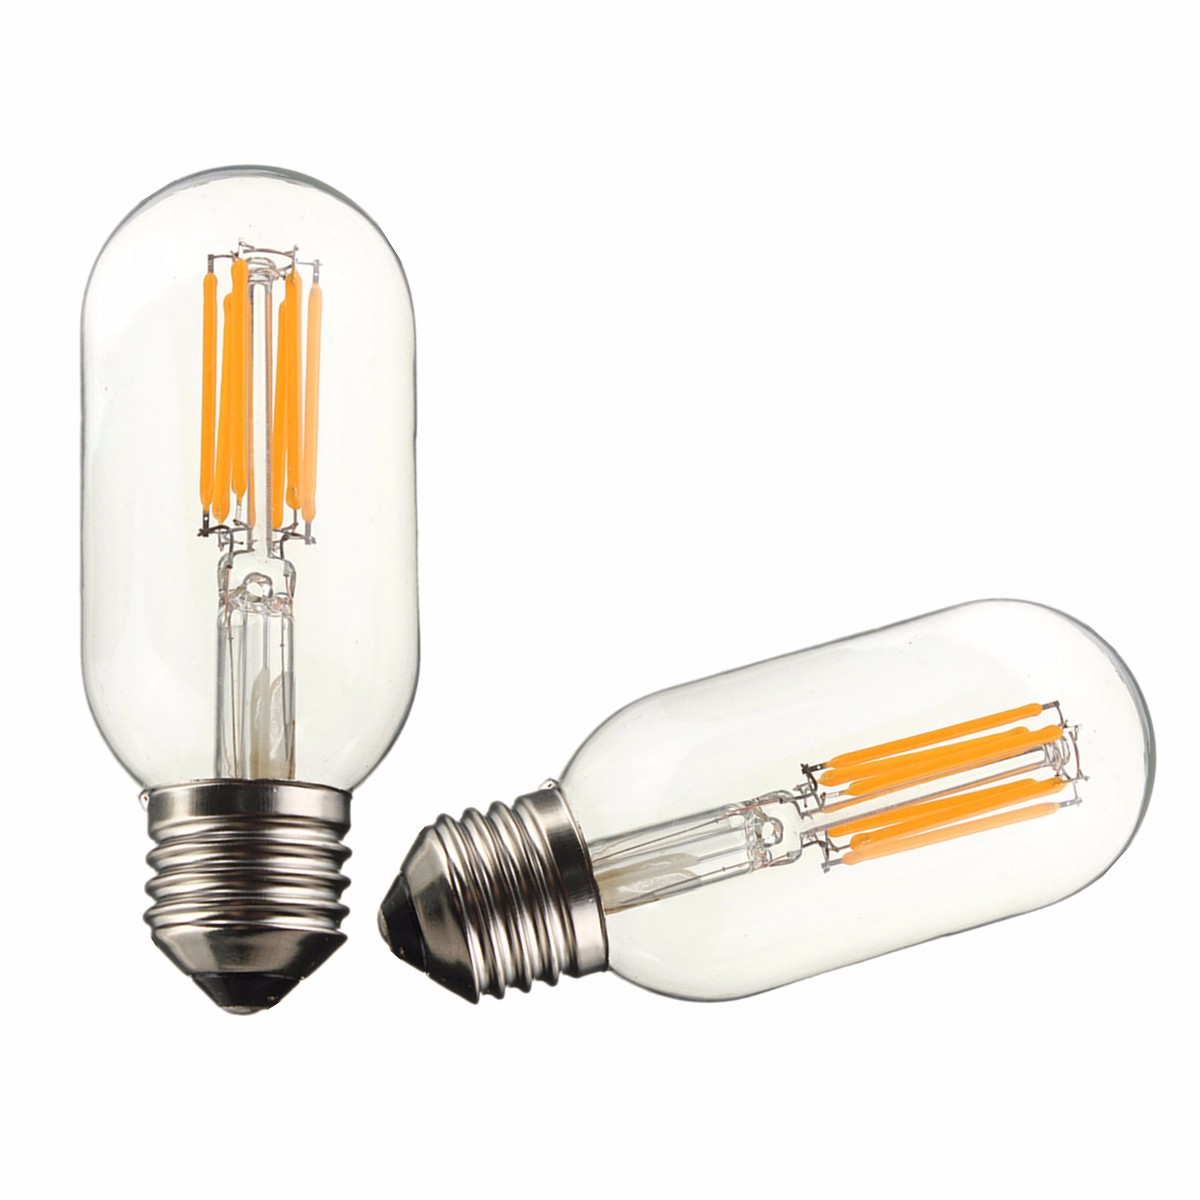 Dimmable-E27-E26-T45-6W-COB-Incandescent-Warm-White-Edsion-Restro-Light-Lamp-Bulb-AC110V-AC220V-1074235-4